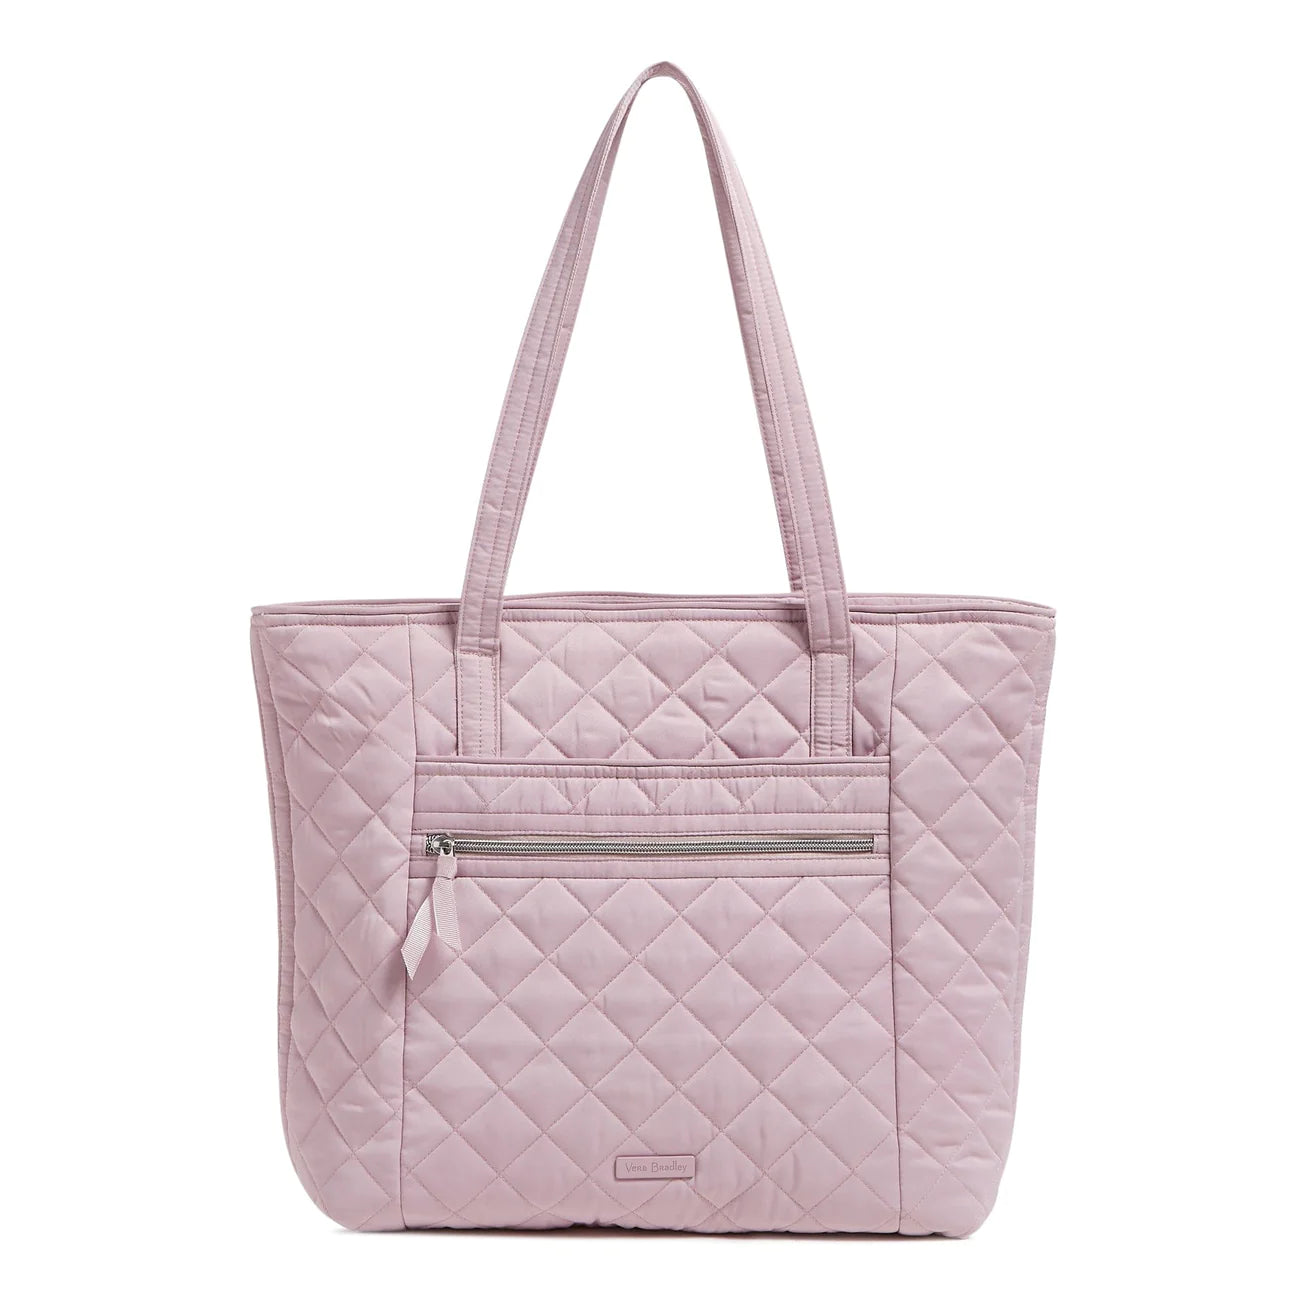 Vera Tote Bag : Hydrangea Pink - Image 1